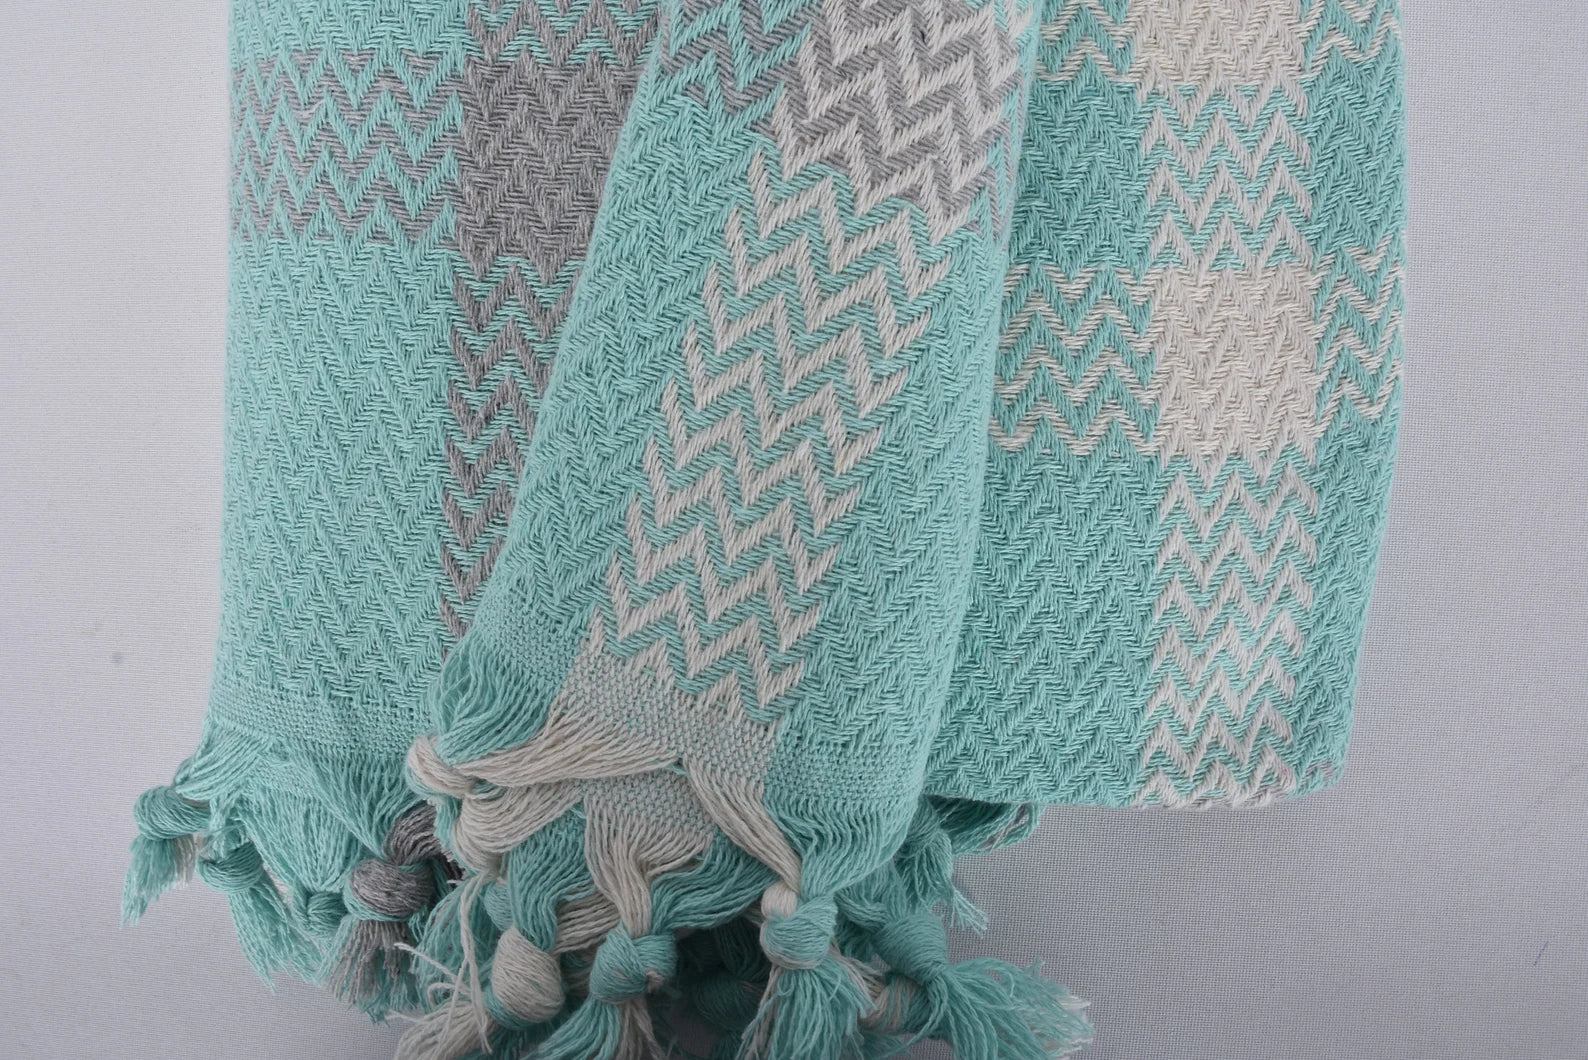 Plaid Weave Blanket Turkish Cotton 89"x79" - Mint